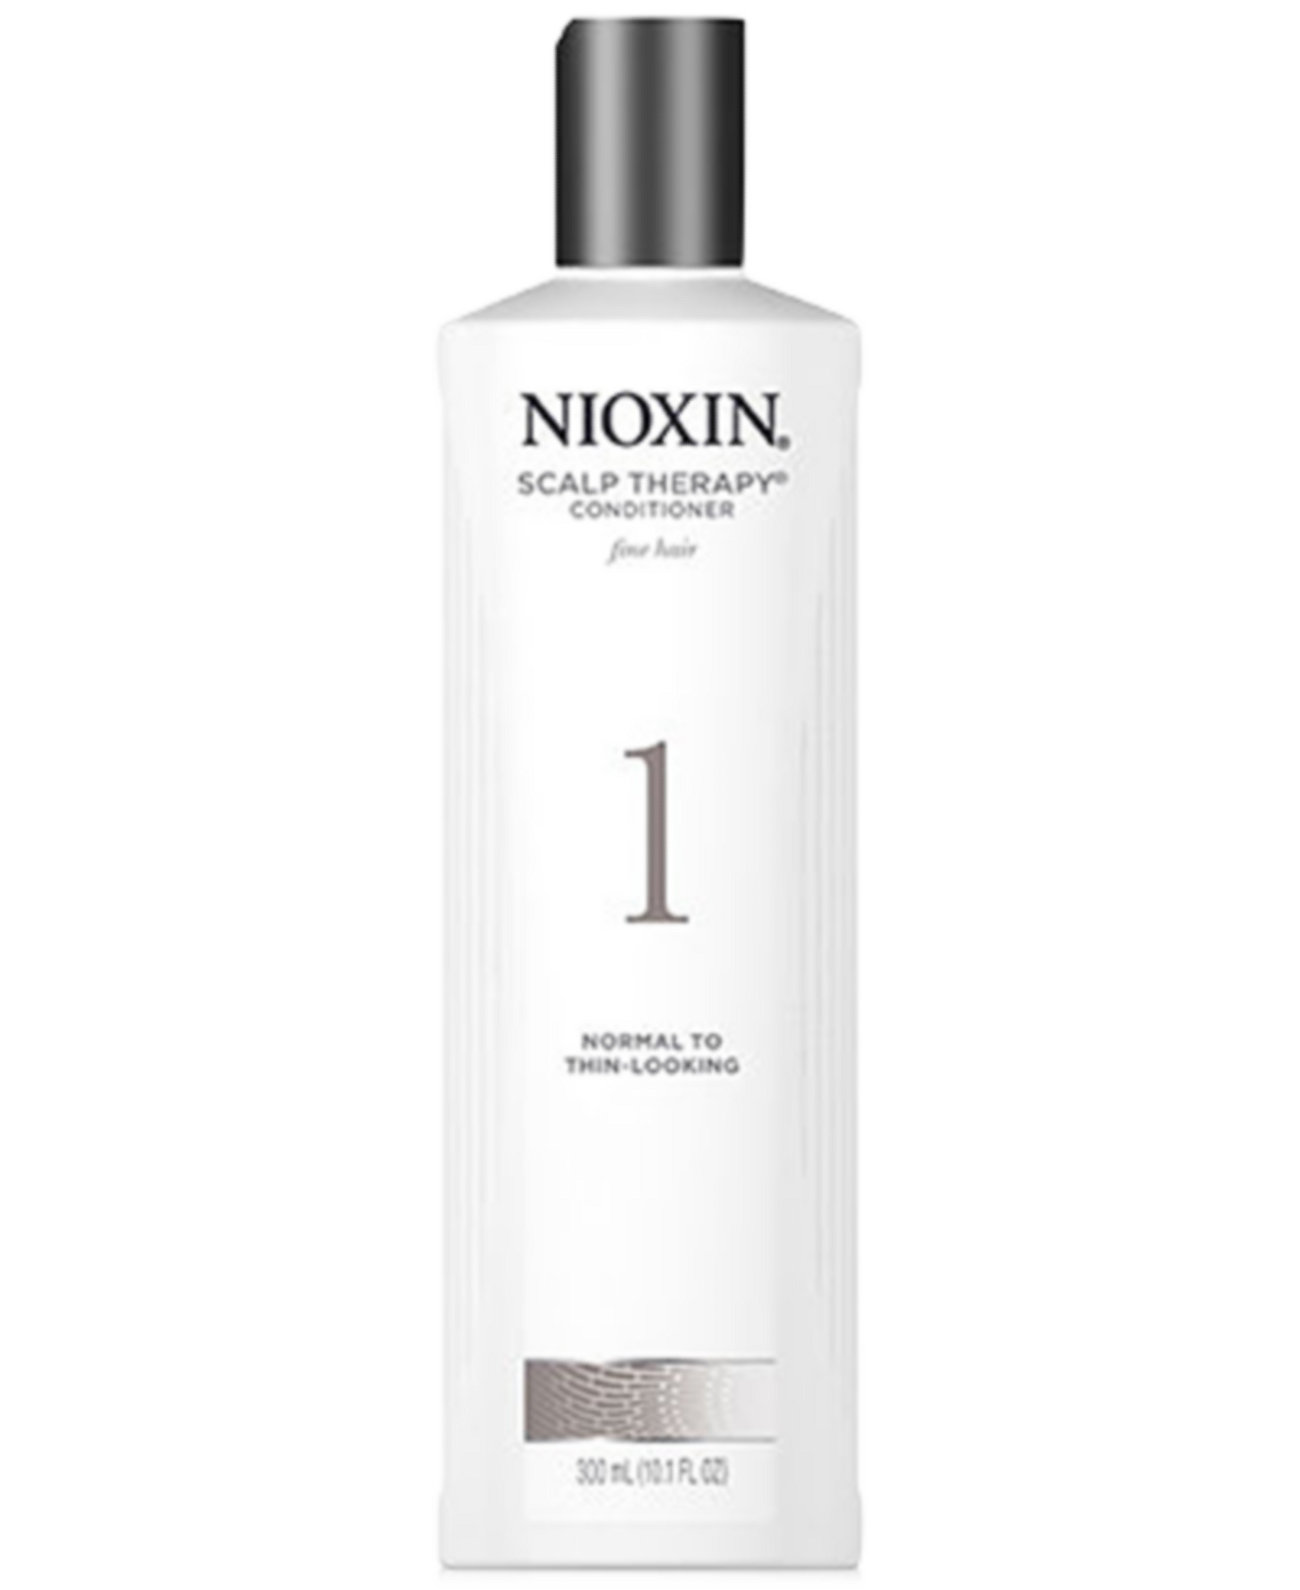 Nixon System 1 для лечения кожи головы, 10,14 унции, от PUREBEAUTY Salon & Spa Nioxin